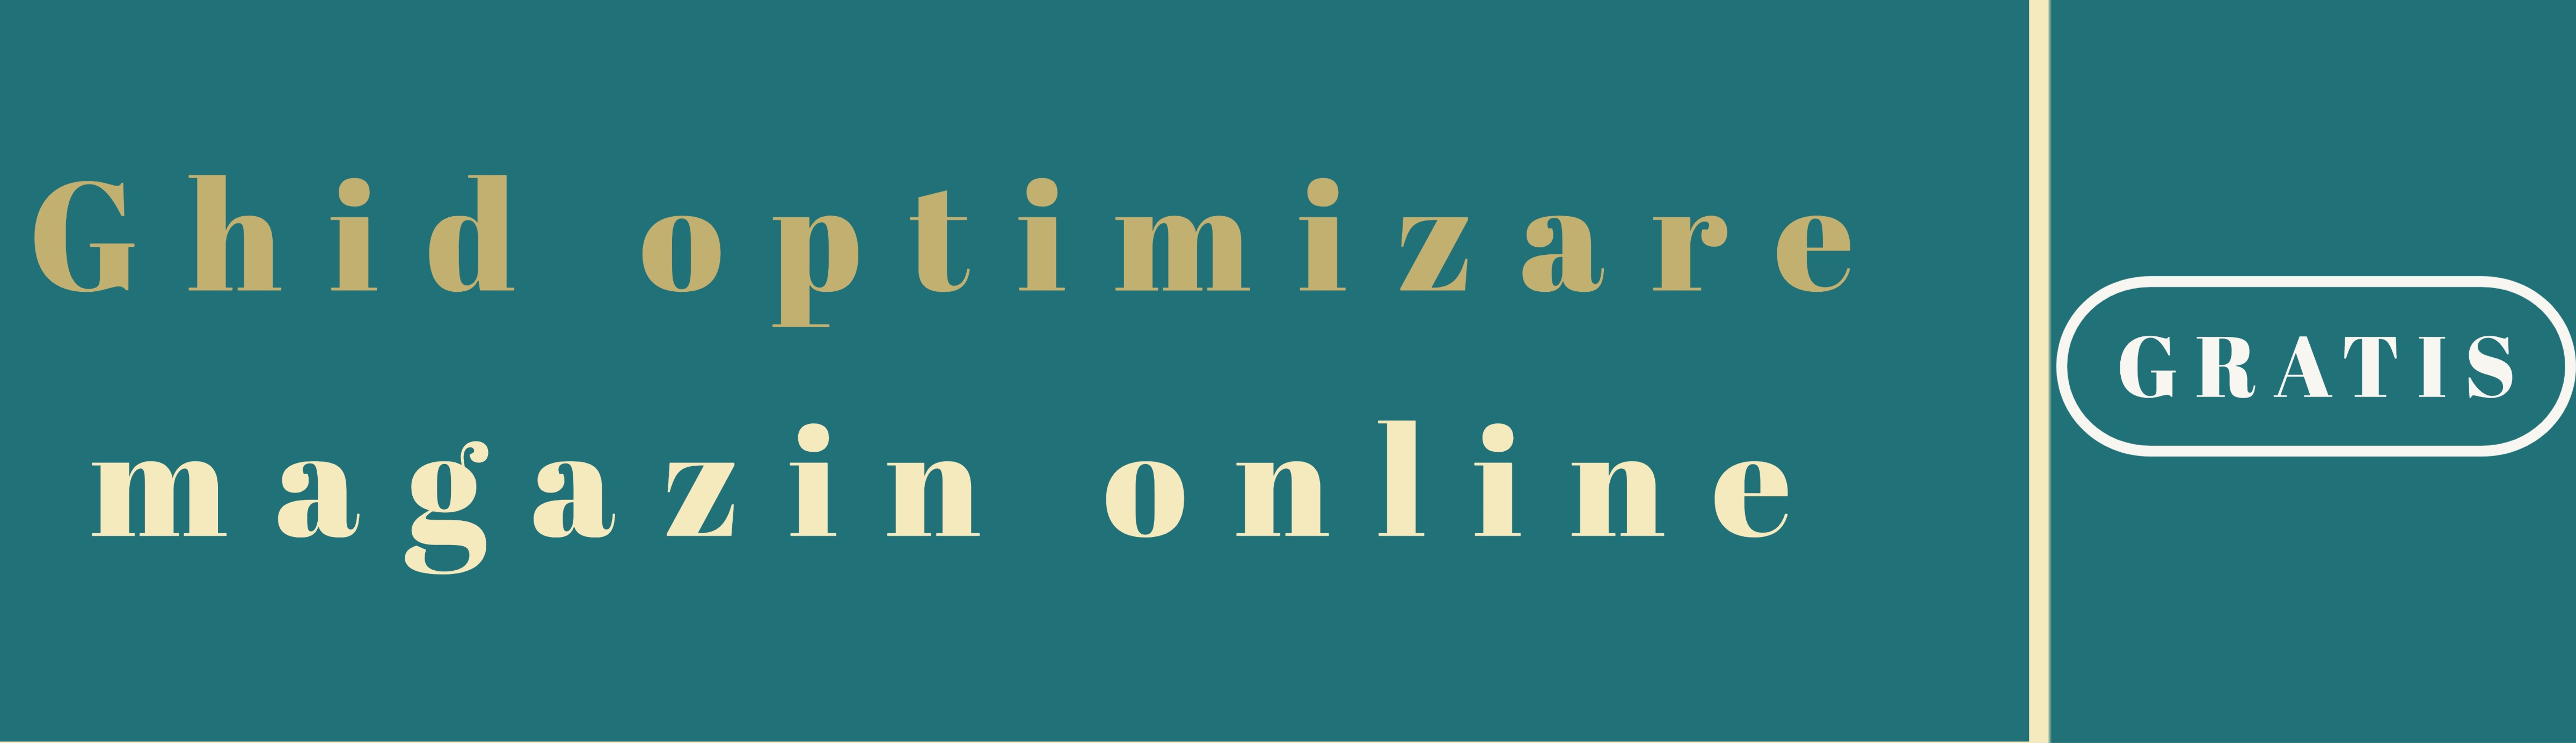 Lukru online pe net fara investitii la compania Oriflame